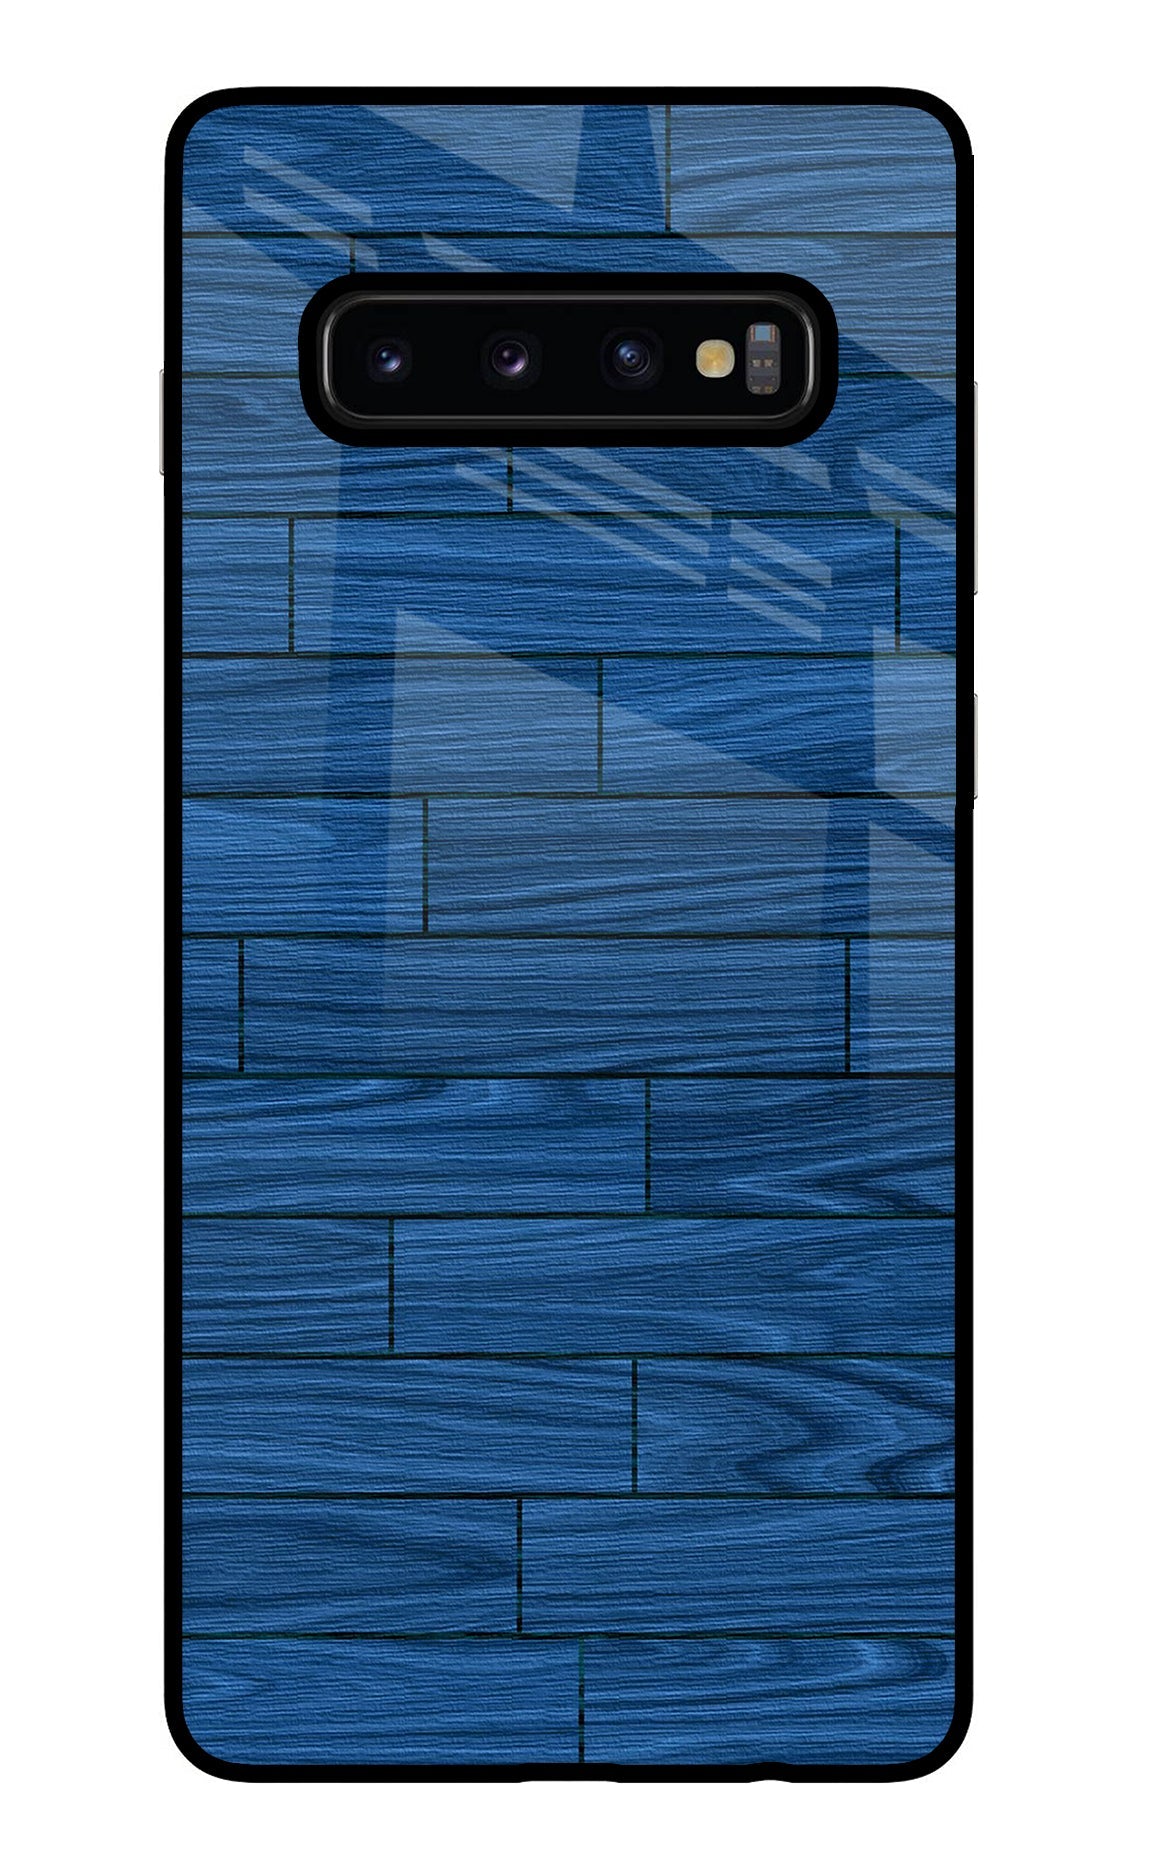 Wooden Texture Samsung S10 Plus Glass Case